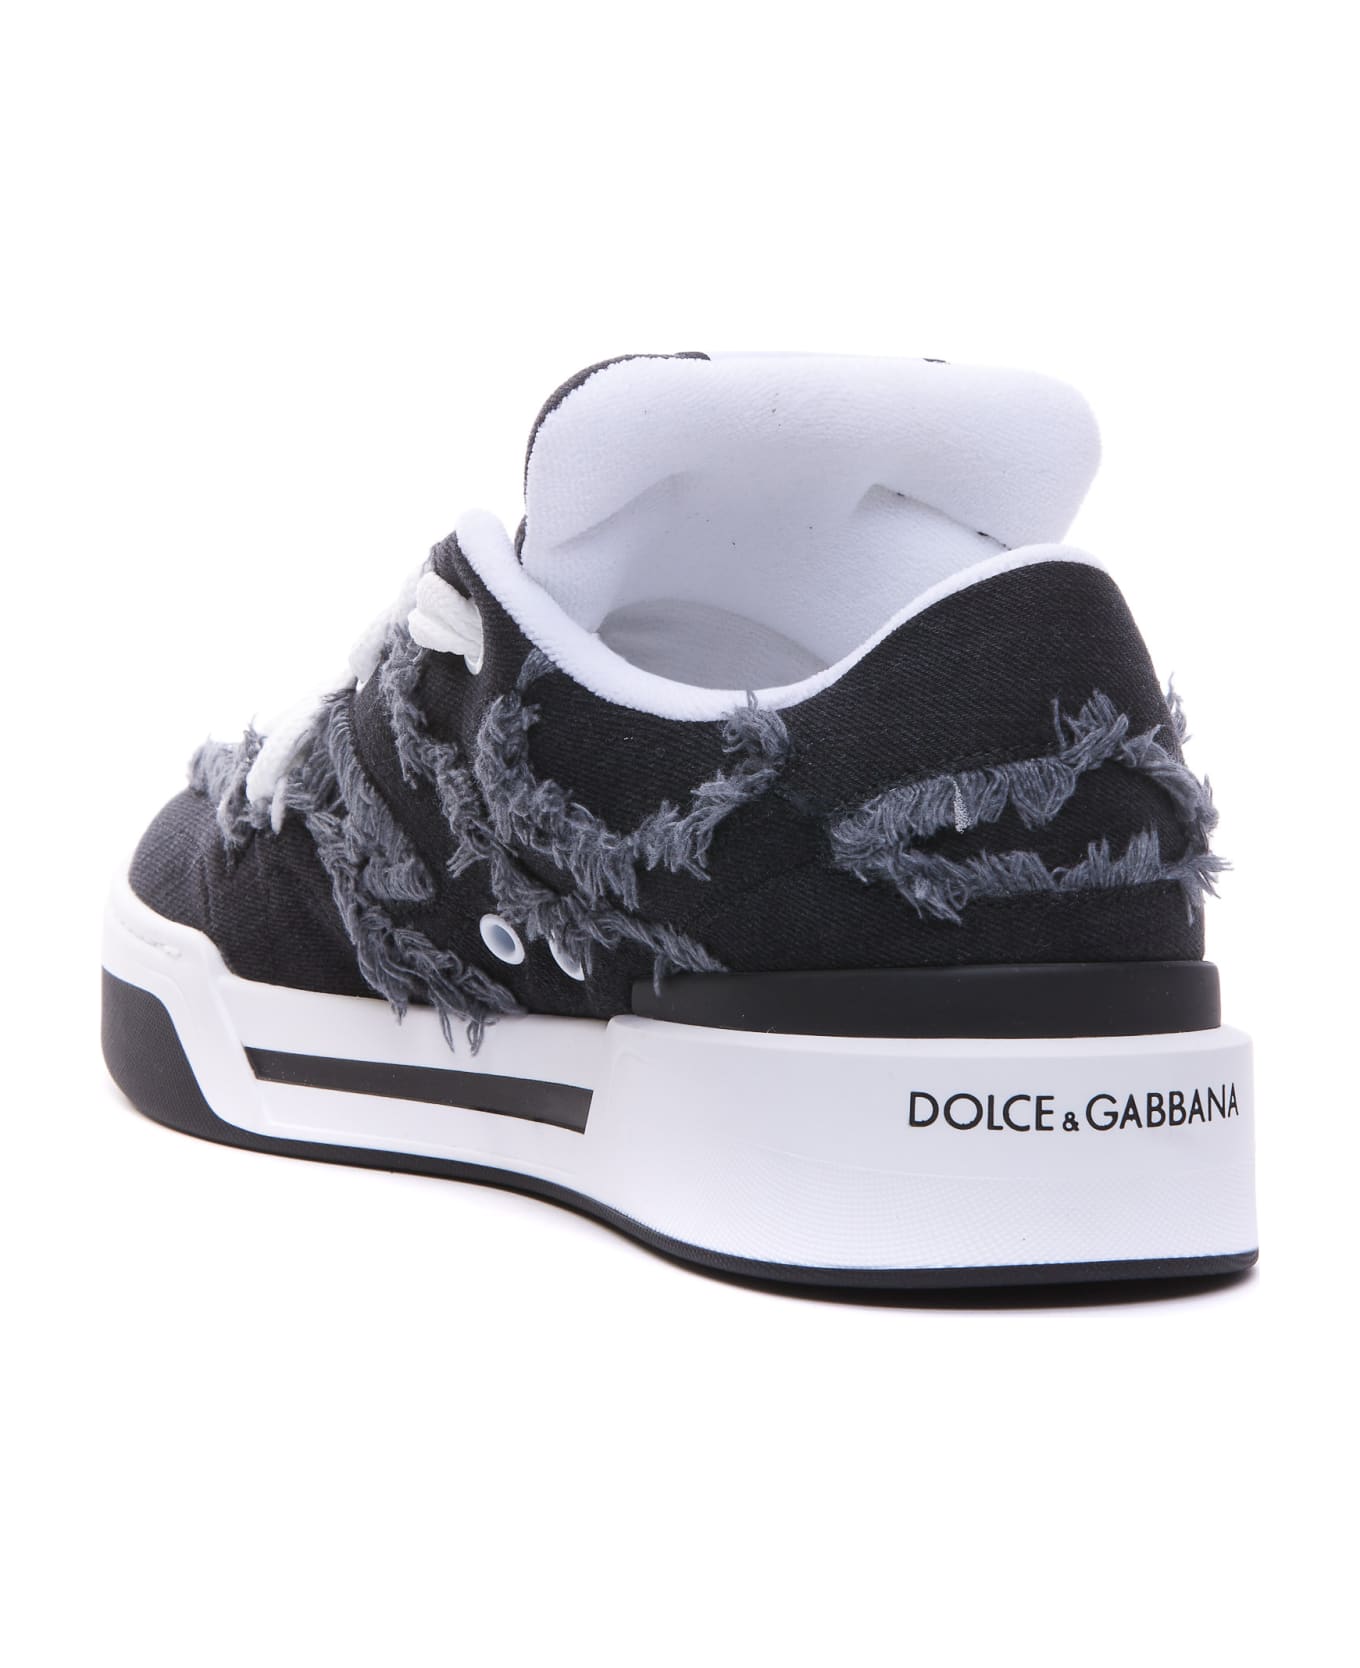 Dolce & Gabbana New Roma Sneakers - Black